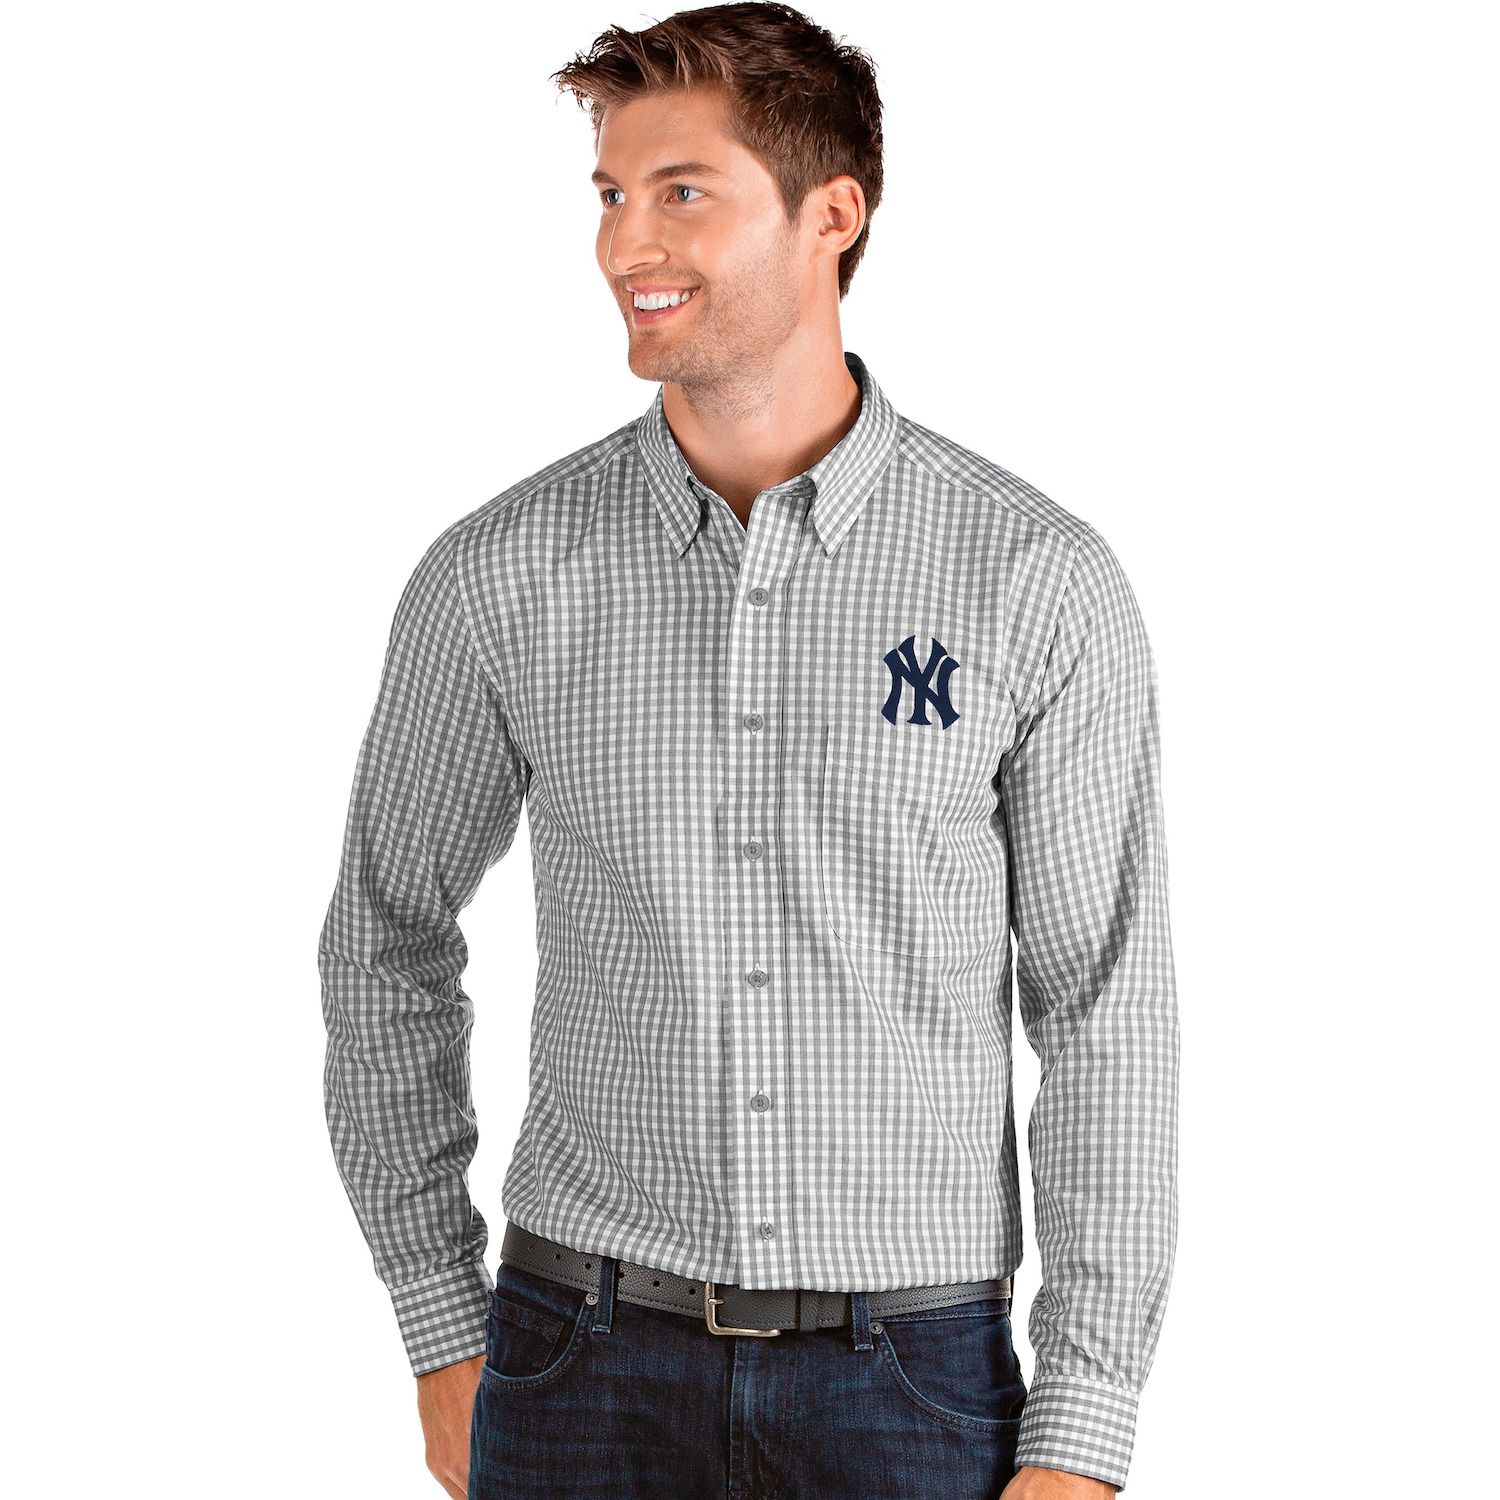 new york yankees men's shirts